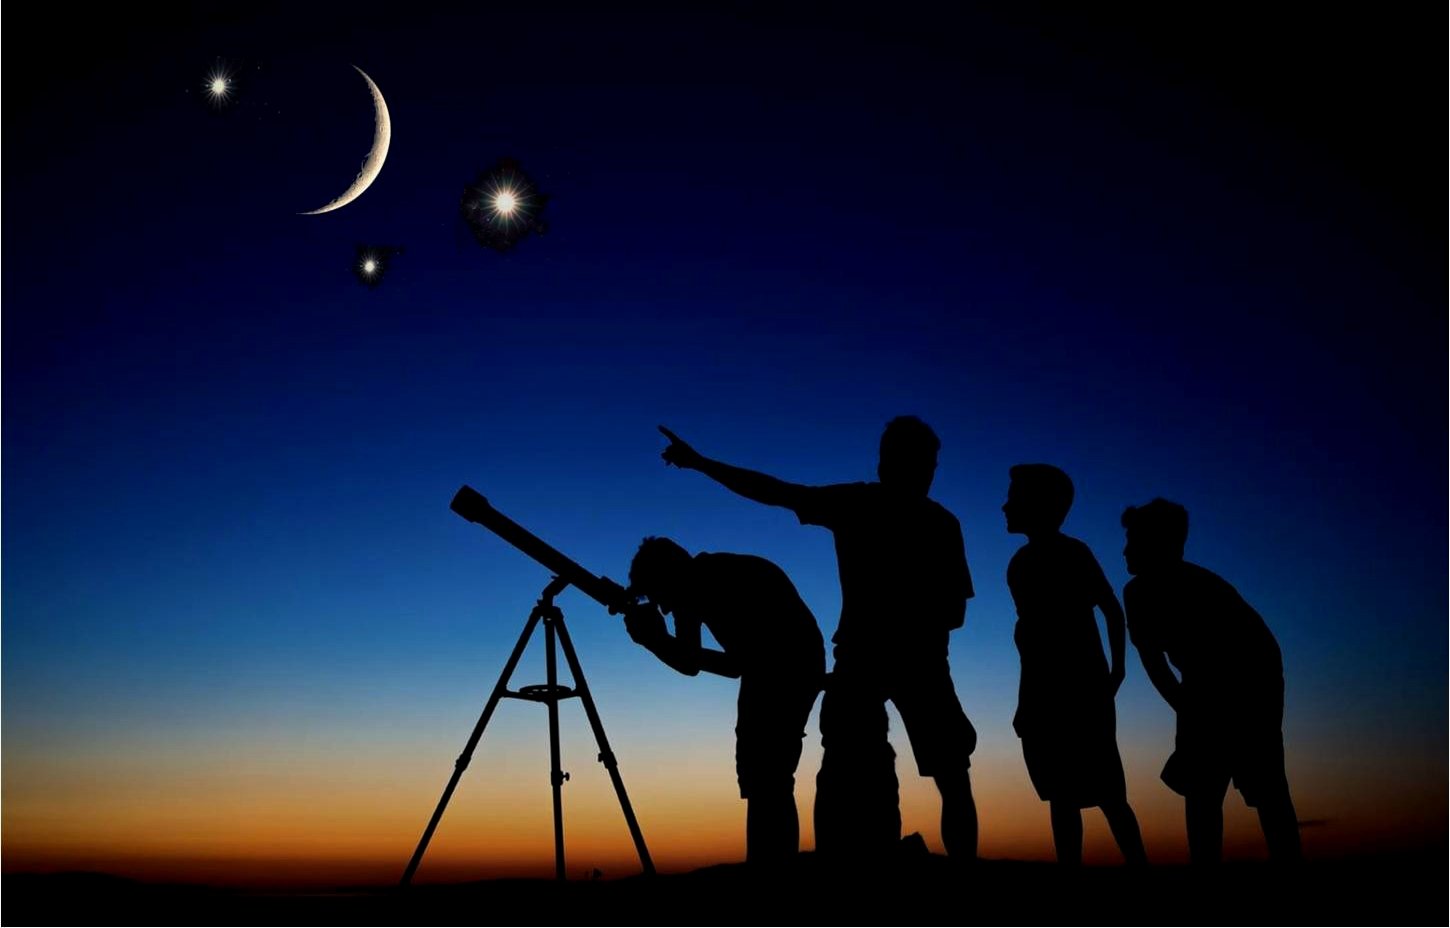 Astronomy Night Google image from http://www.davidreneke.com/wp-content/uploads/2015/11/Planets.jpg